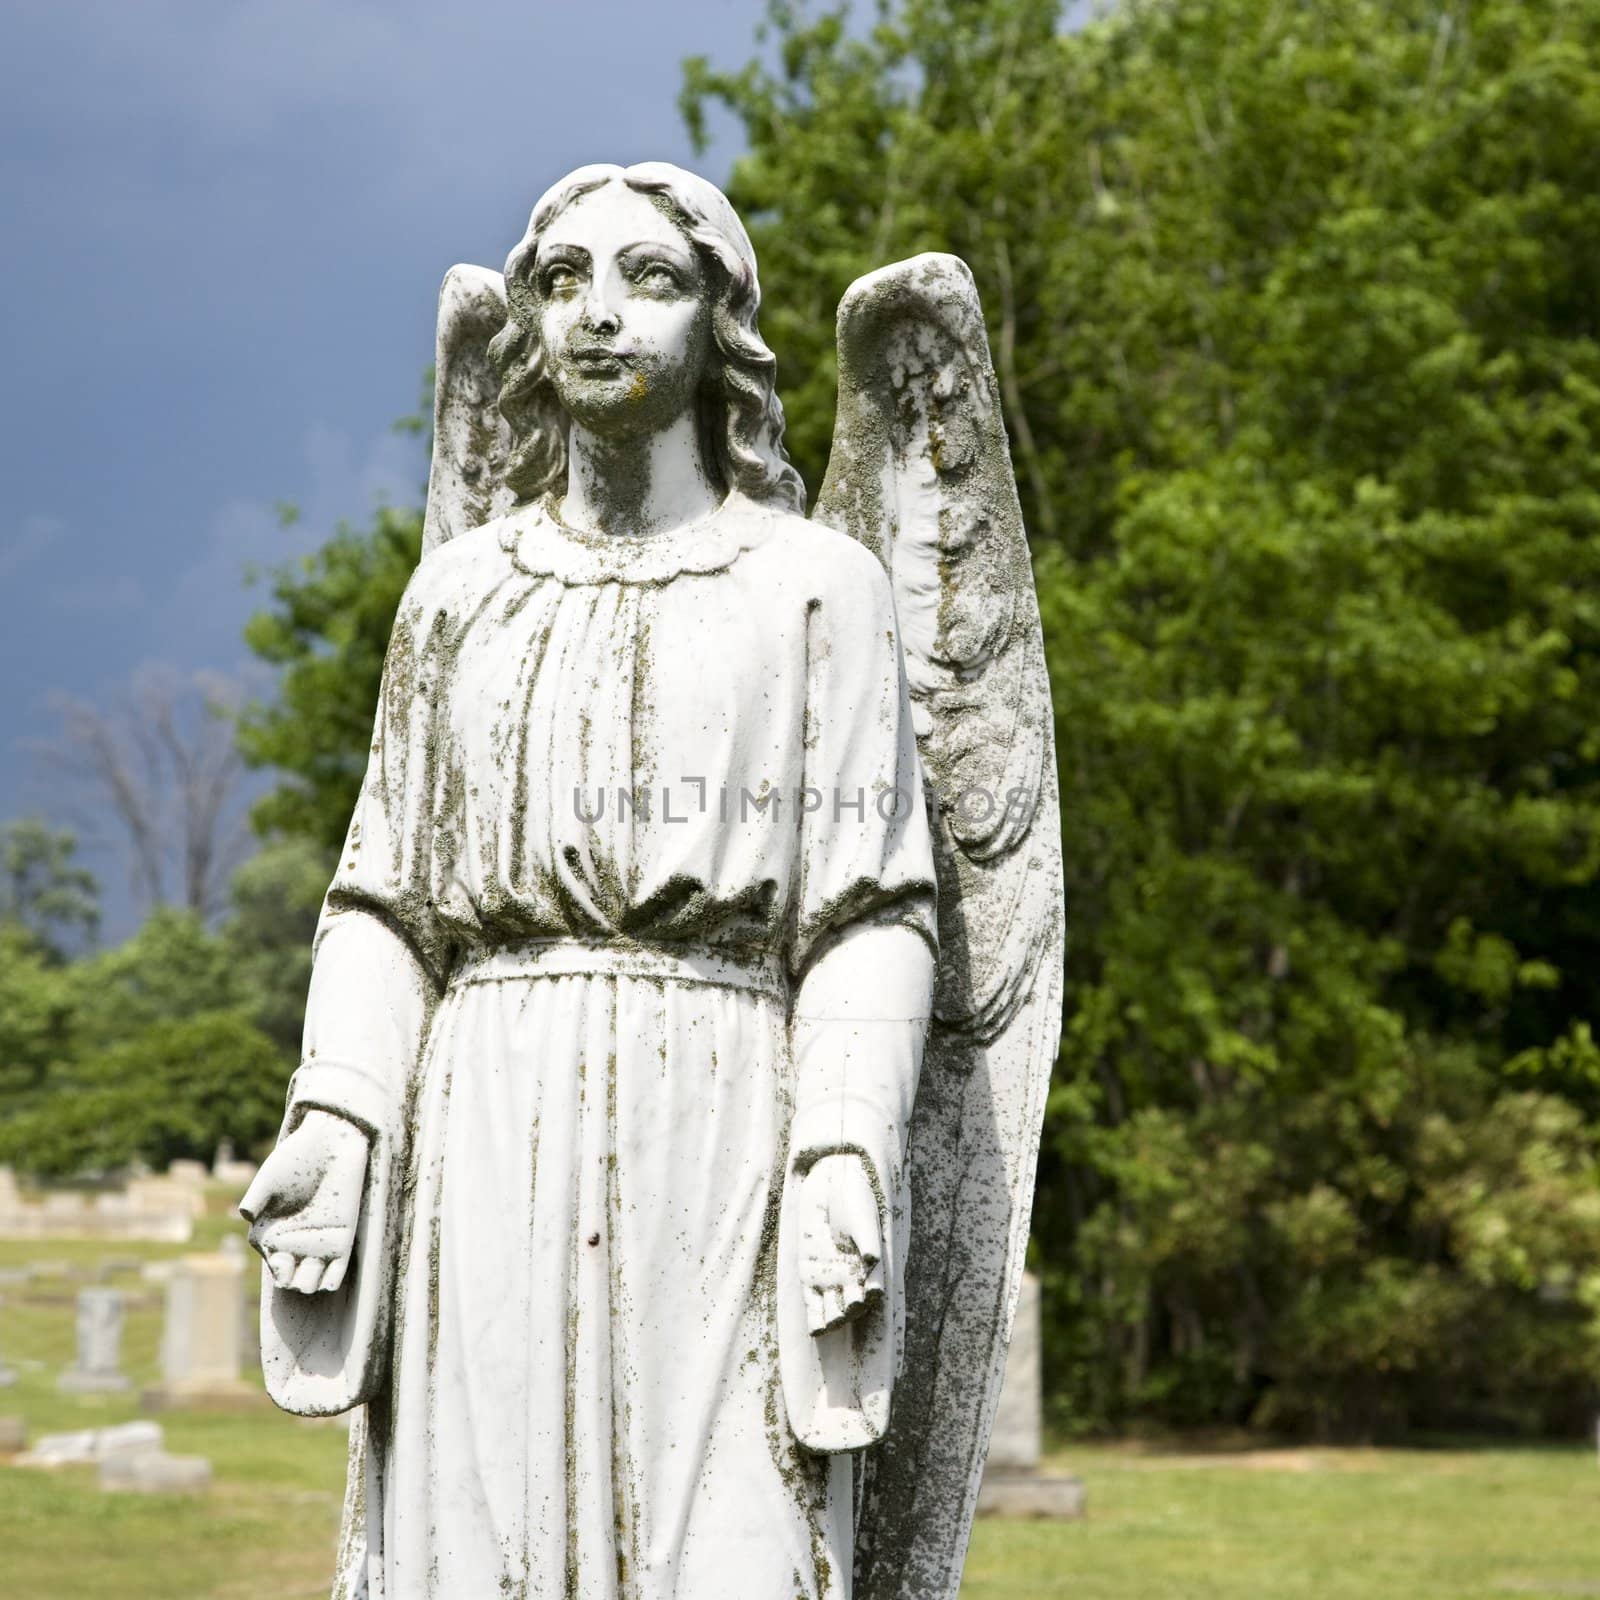 Guardian Angel statue in graveyard.